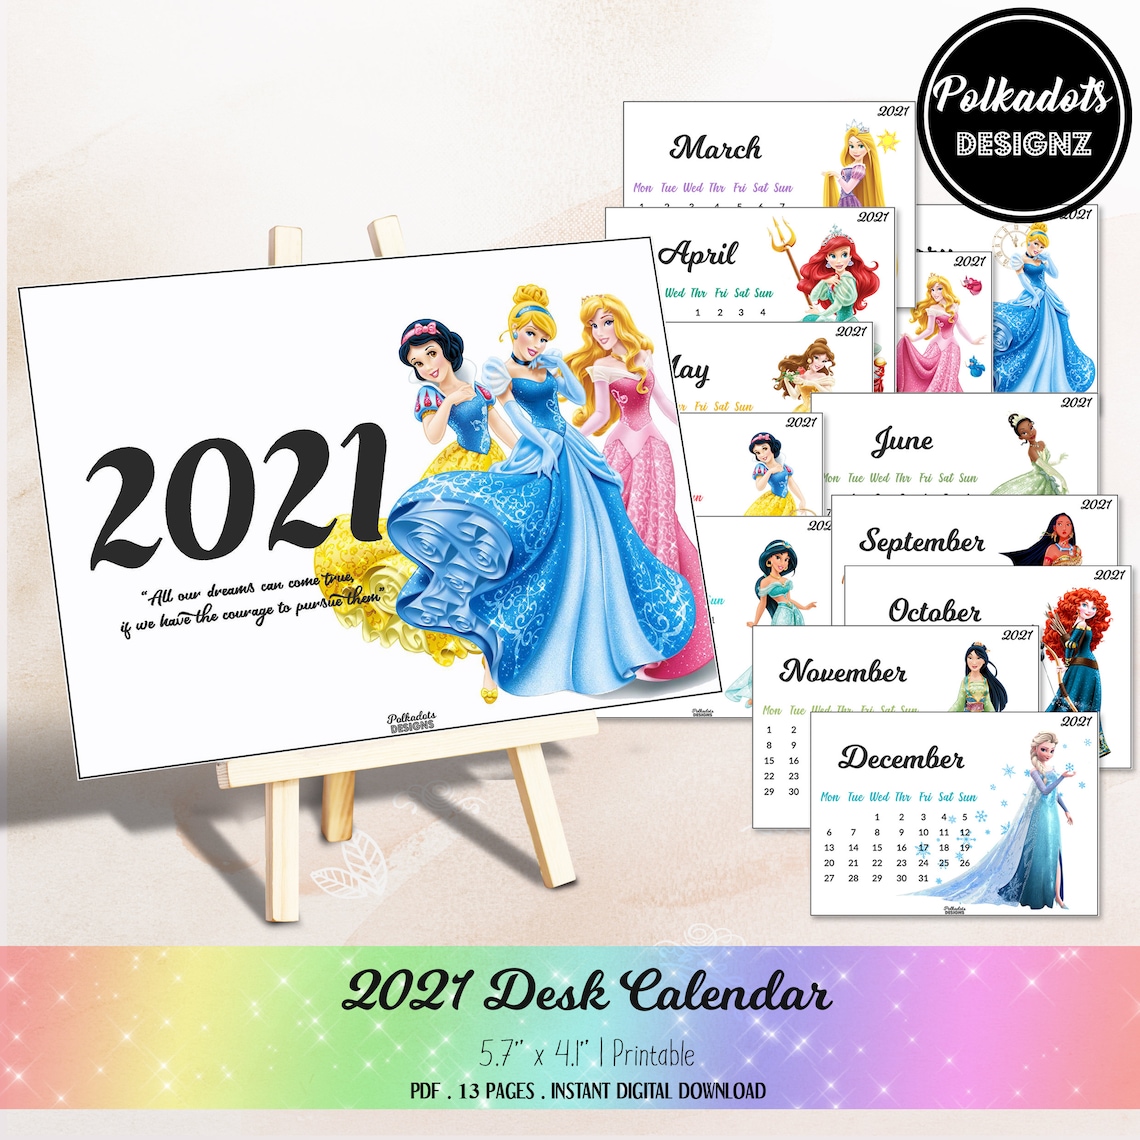 2021 Desk Calendar 5.7 x 4.1 Size Disney Princesses Etsy